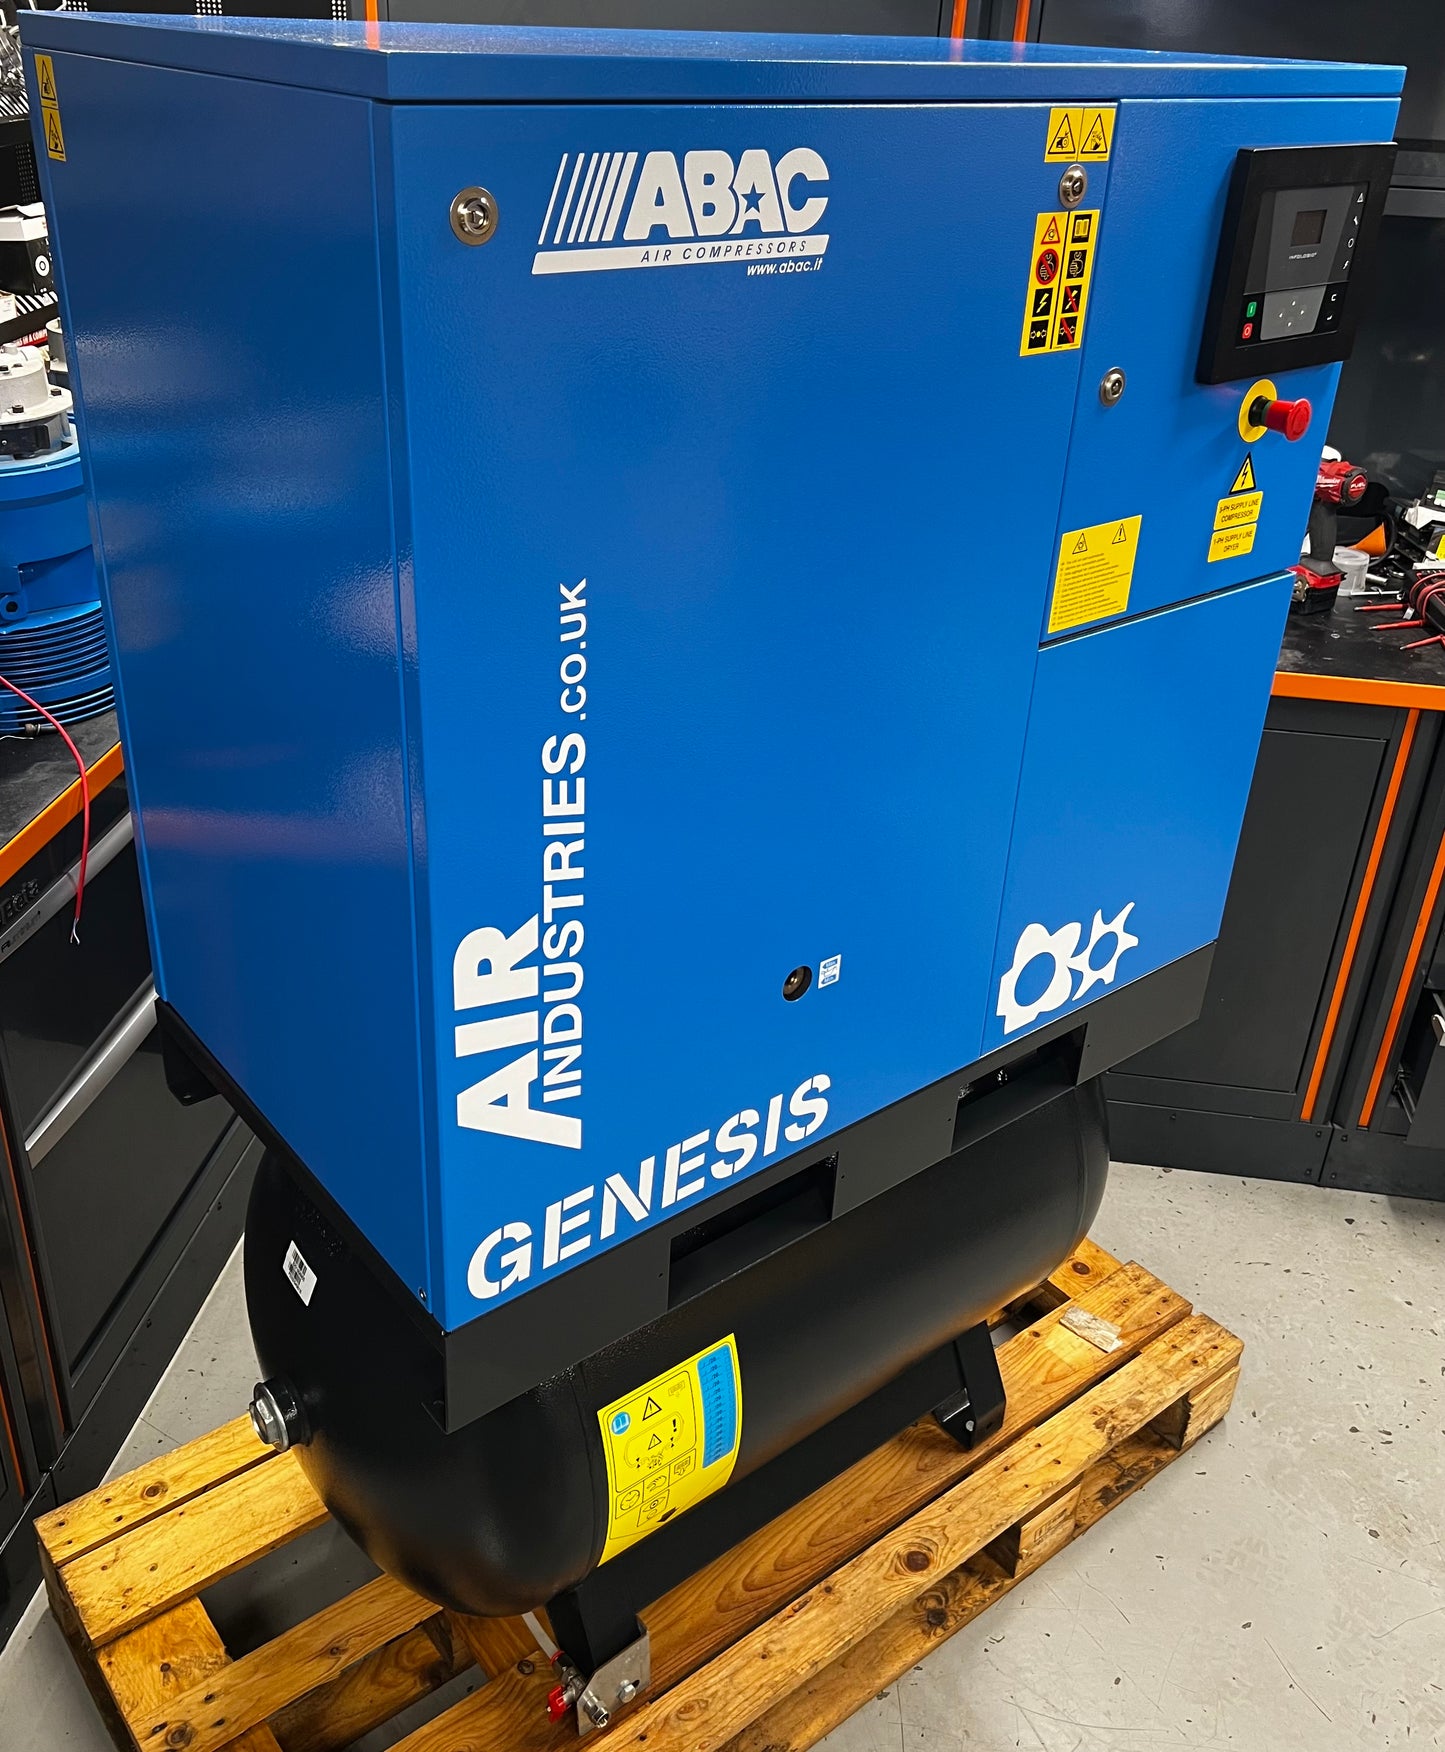 ABAC Genesis 11 Receiver Mounted Rotary Screw Compressor + Dryer! 11Kw, (59Cfm)